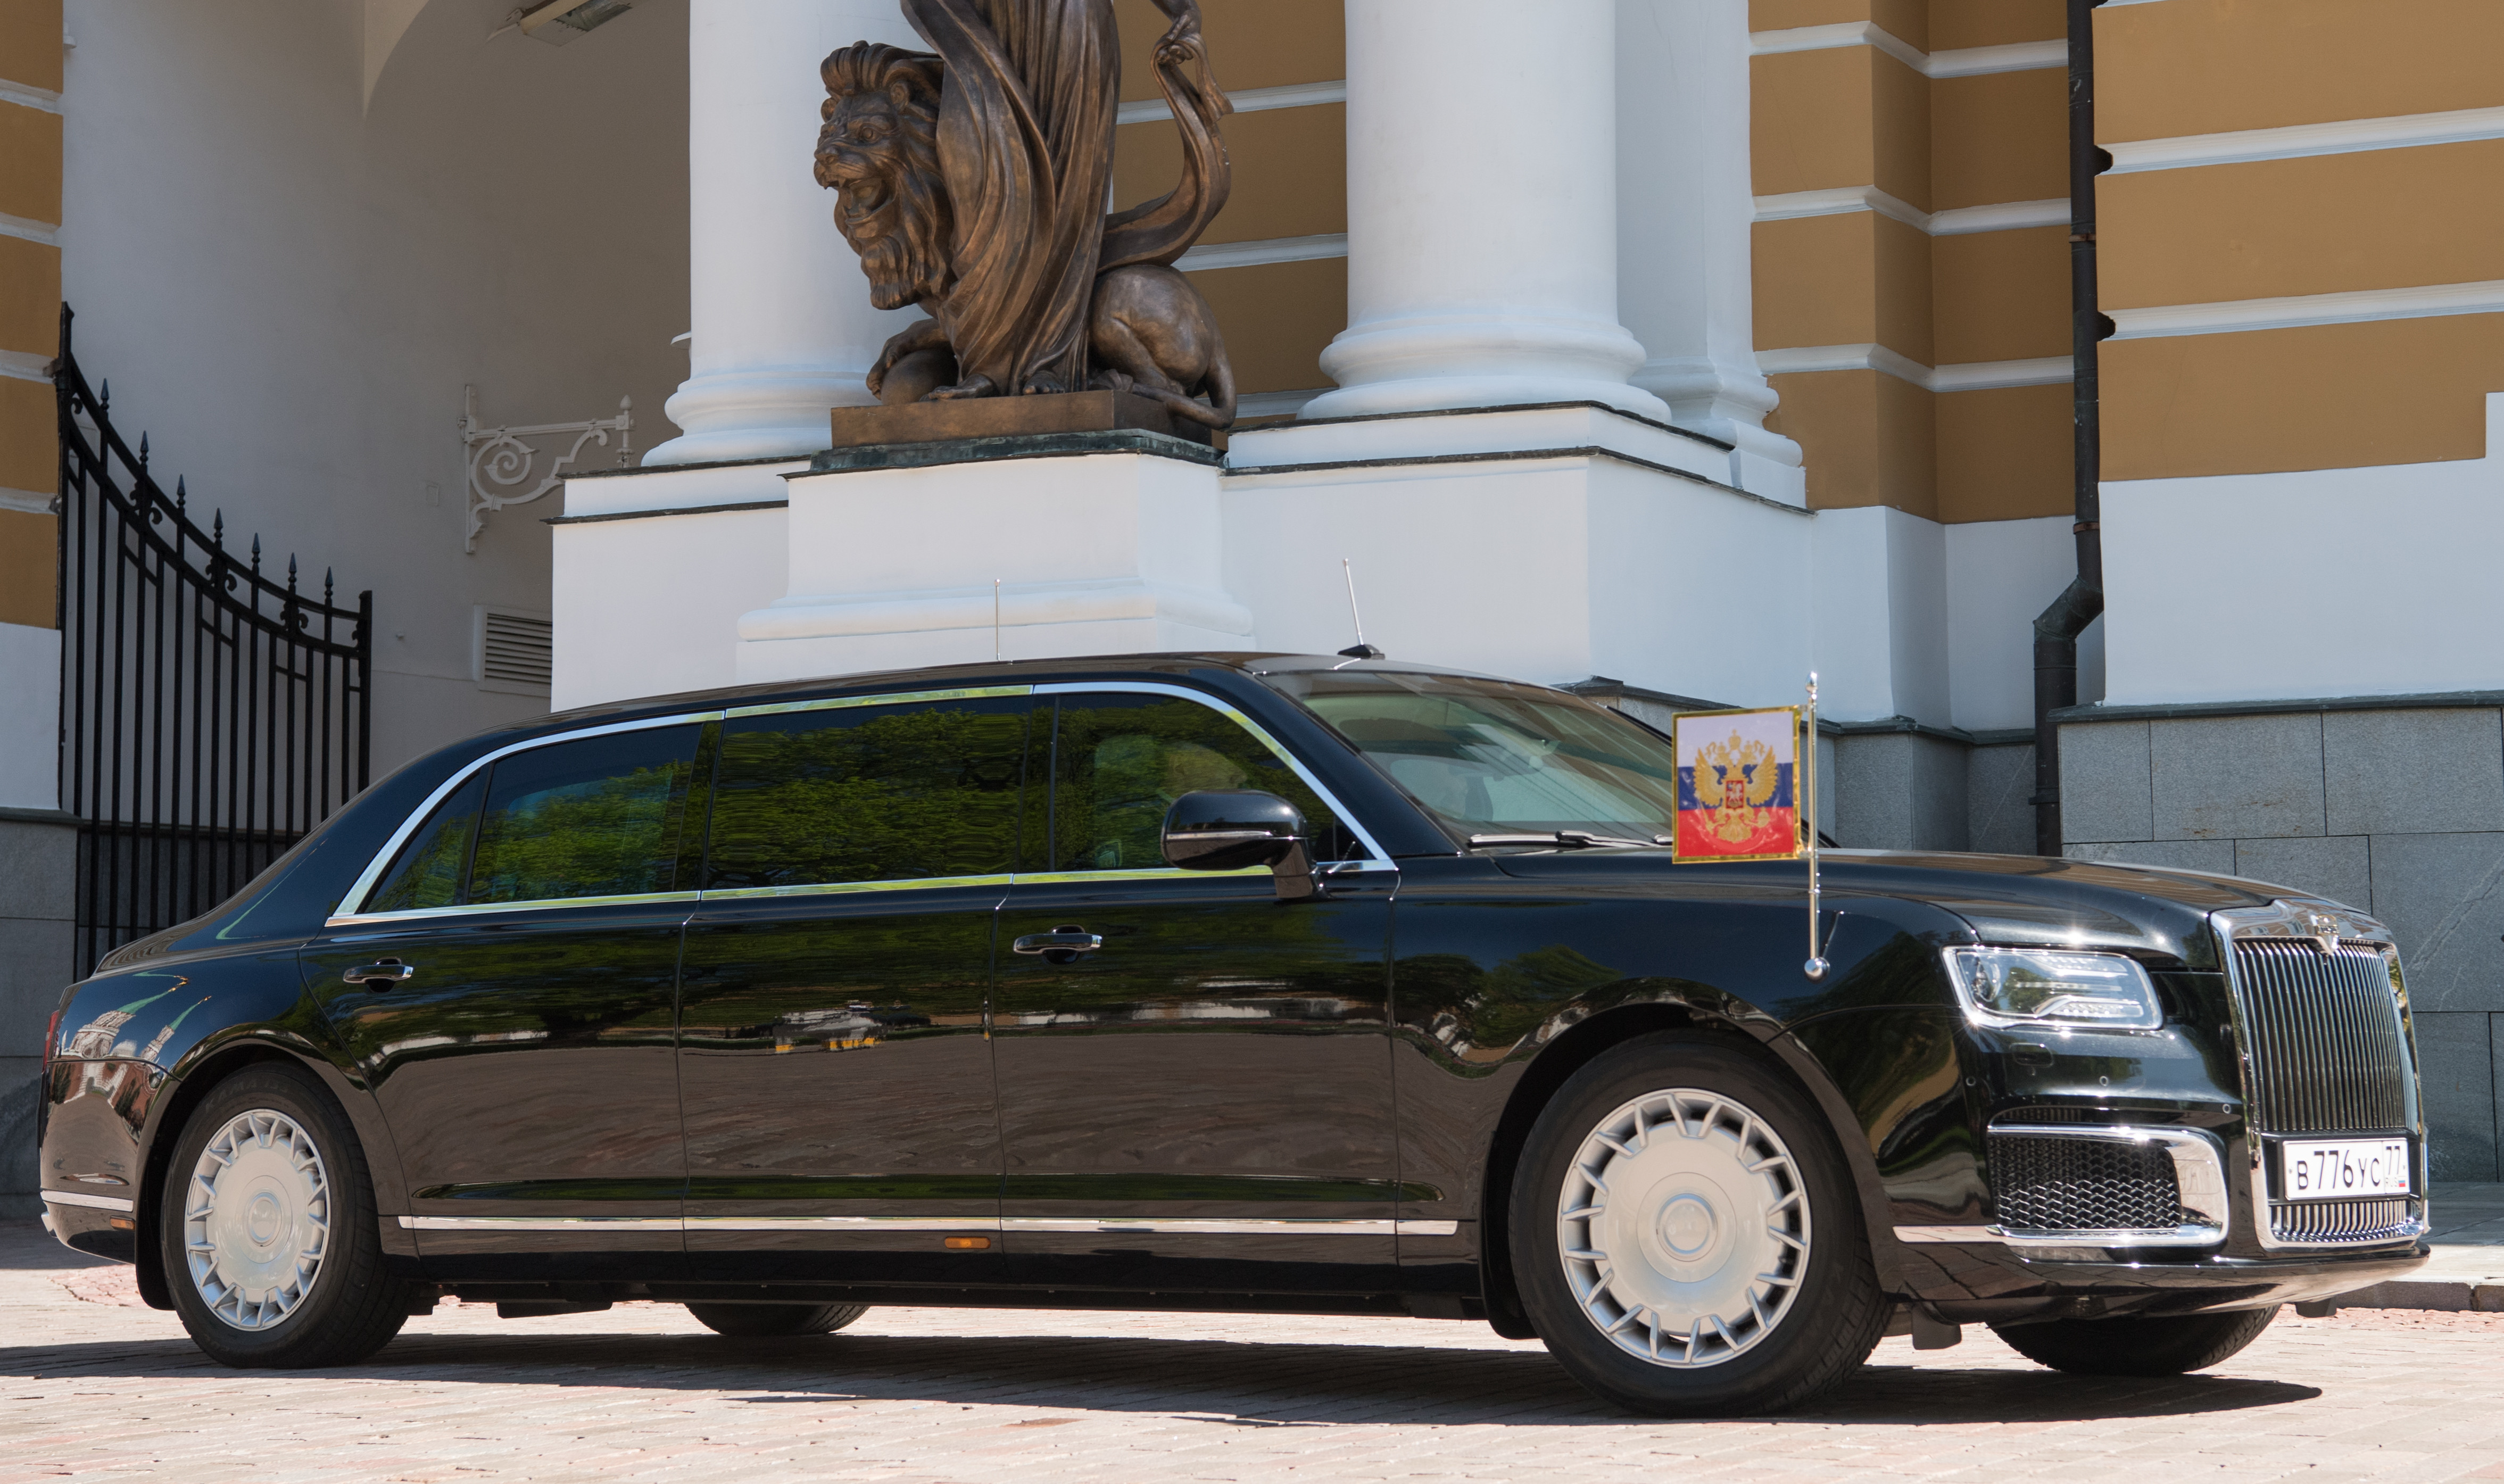 Автомобиль Aurus кортежа президента РФ.&nbsp; 
Фото: &copy; РИА Новости/Сергей Гунеев